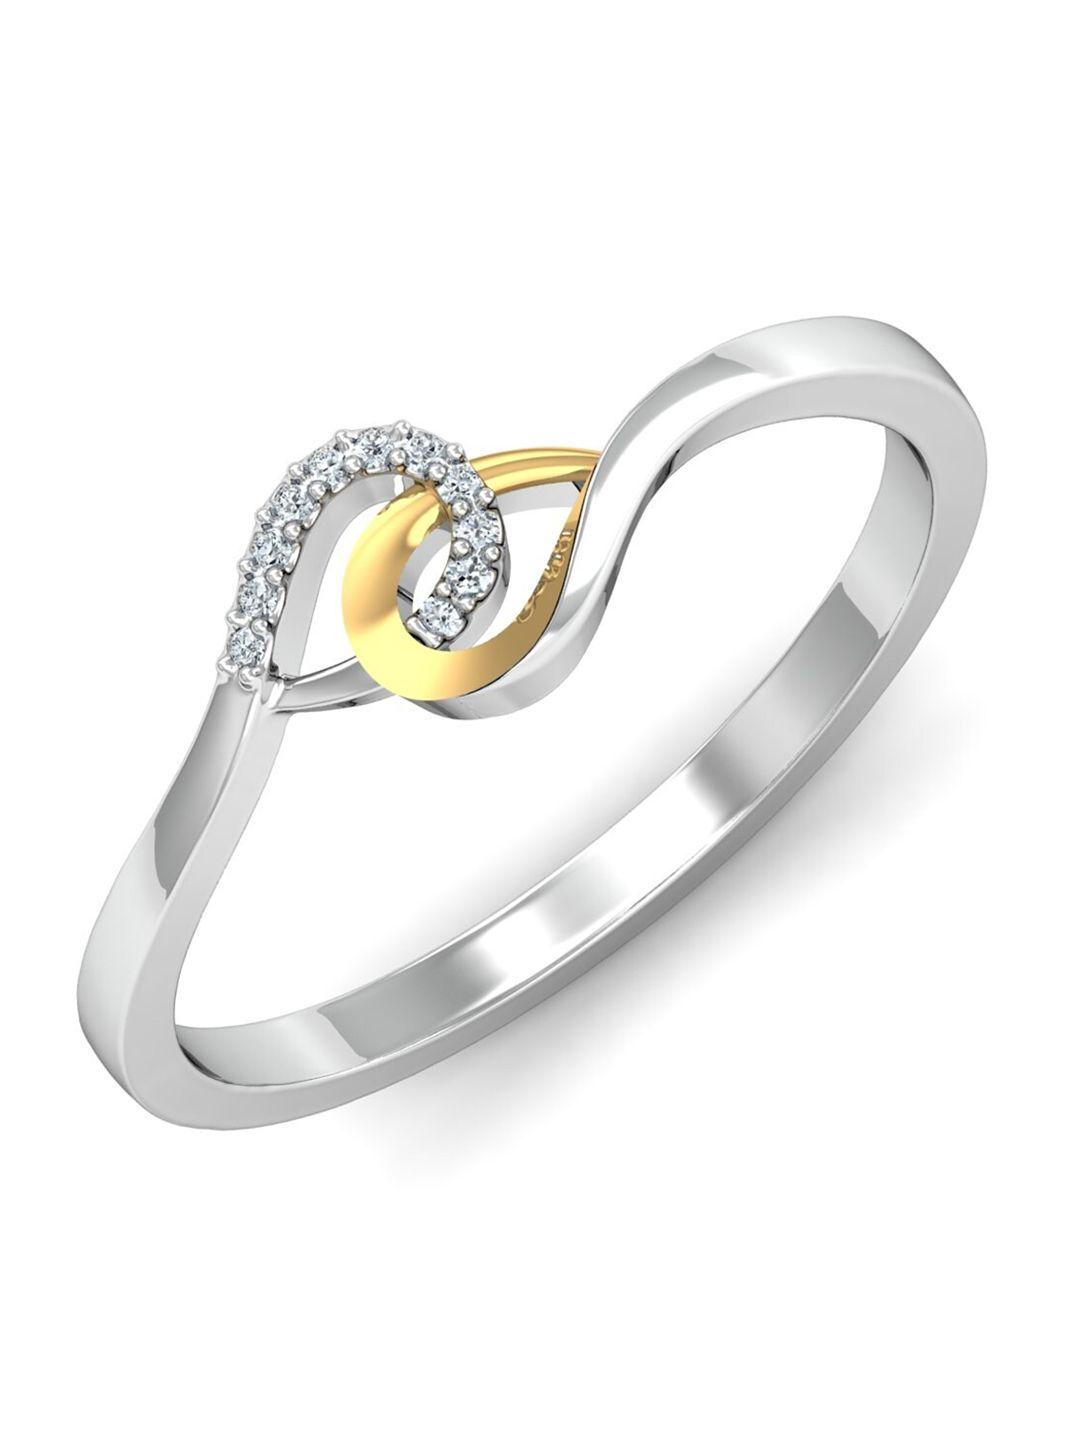 kuberbox 18kt white gold diamond studded ring-1.28gm